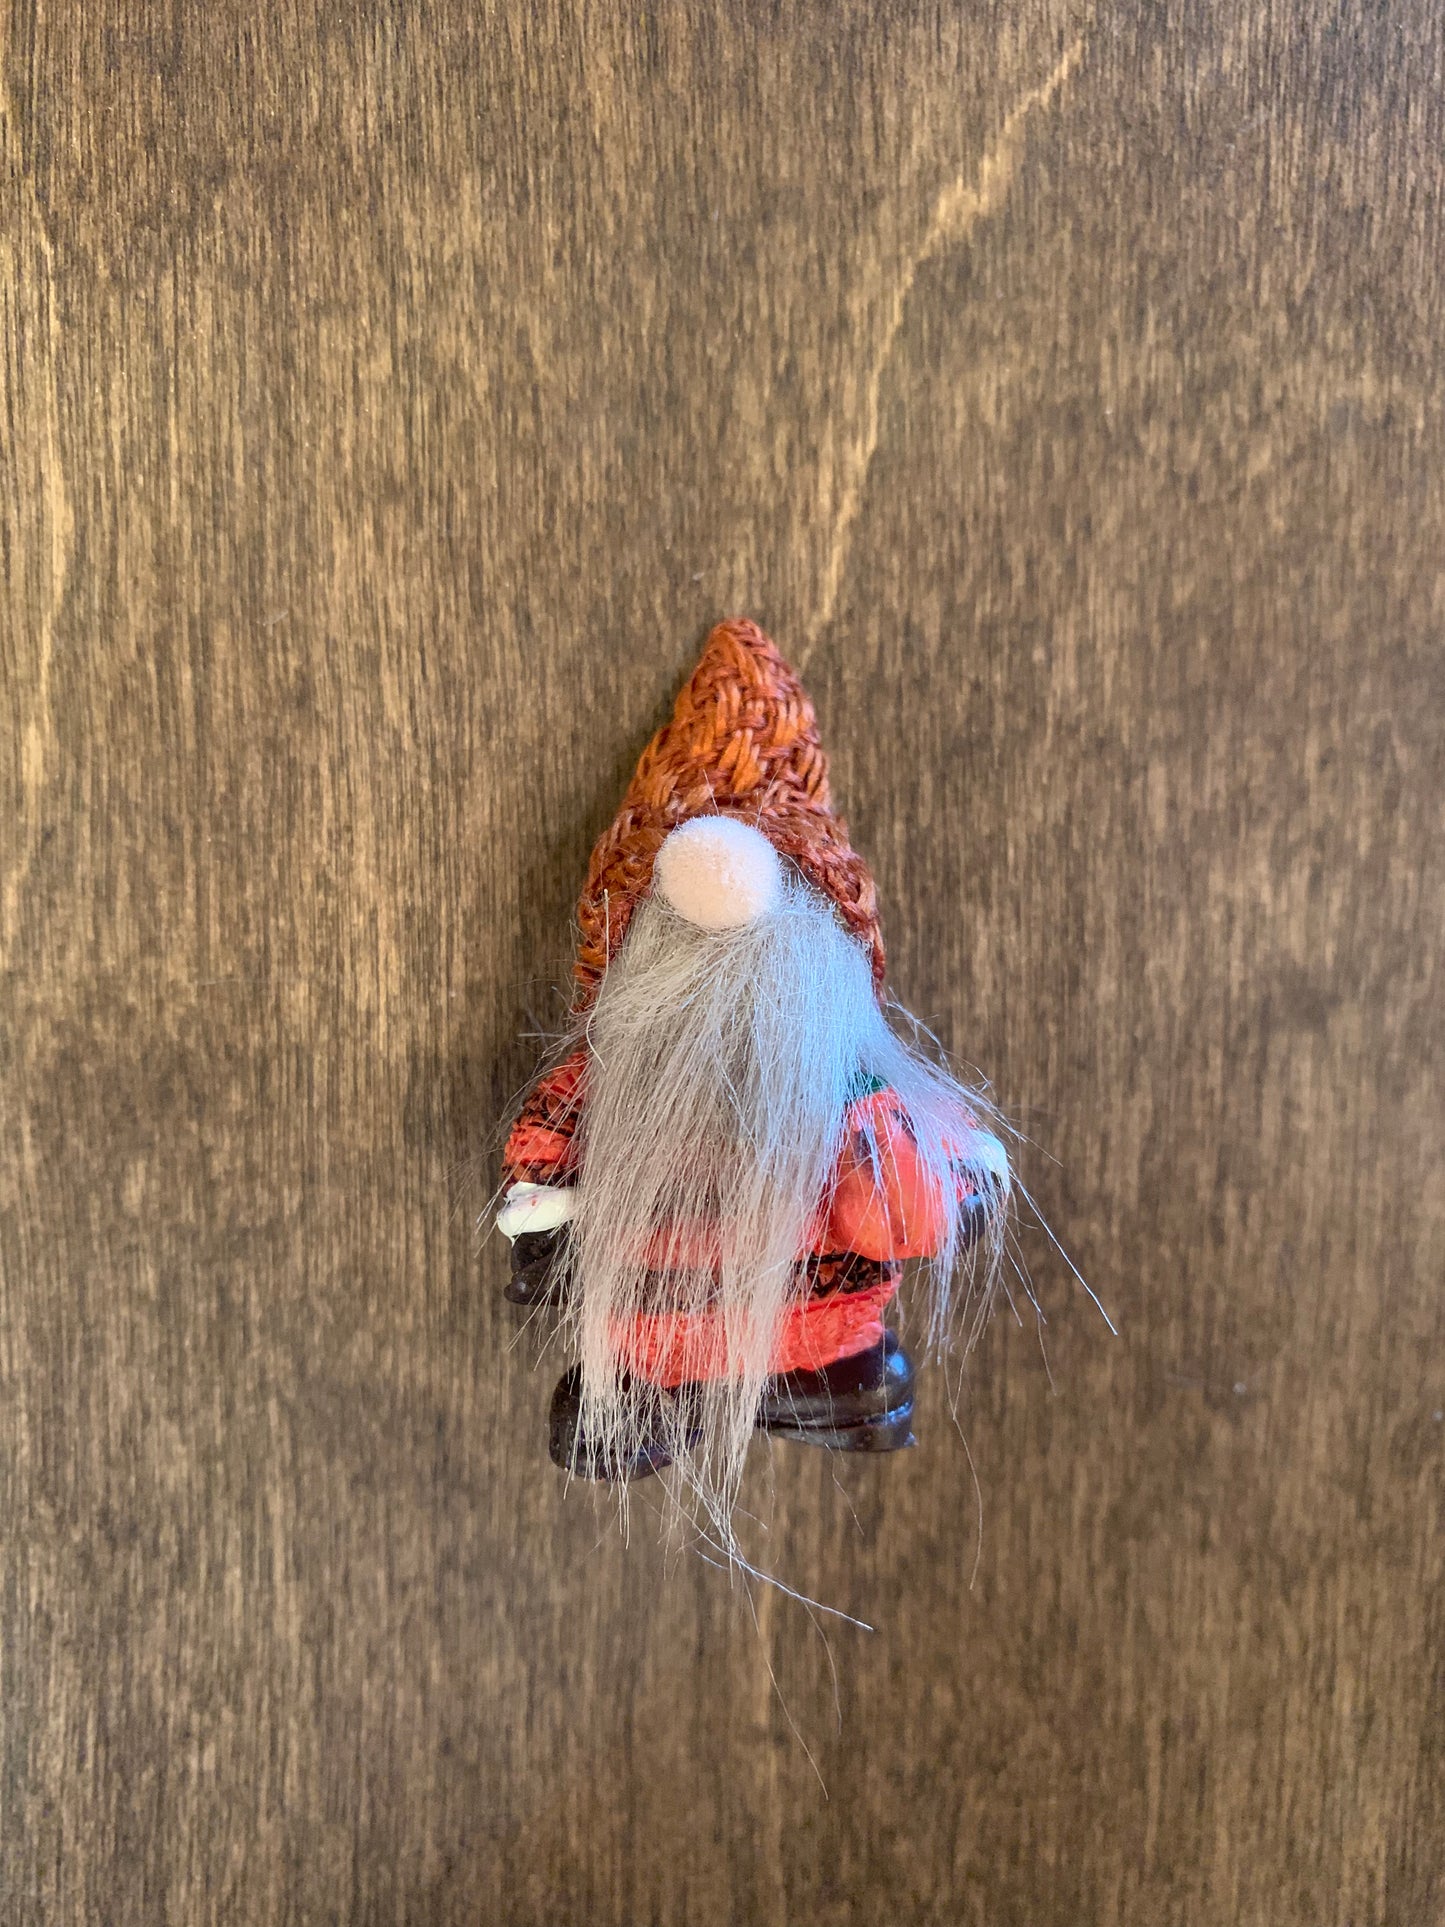 * Lucky Little Autumn Gnome